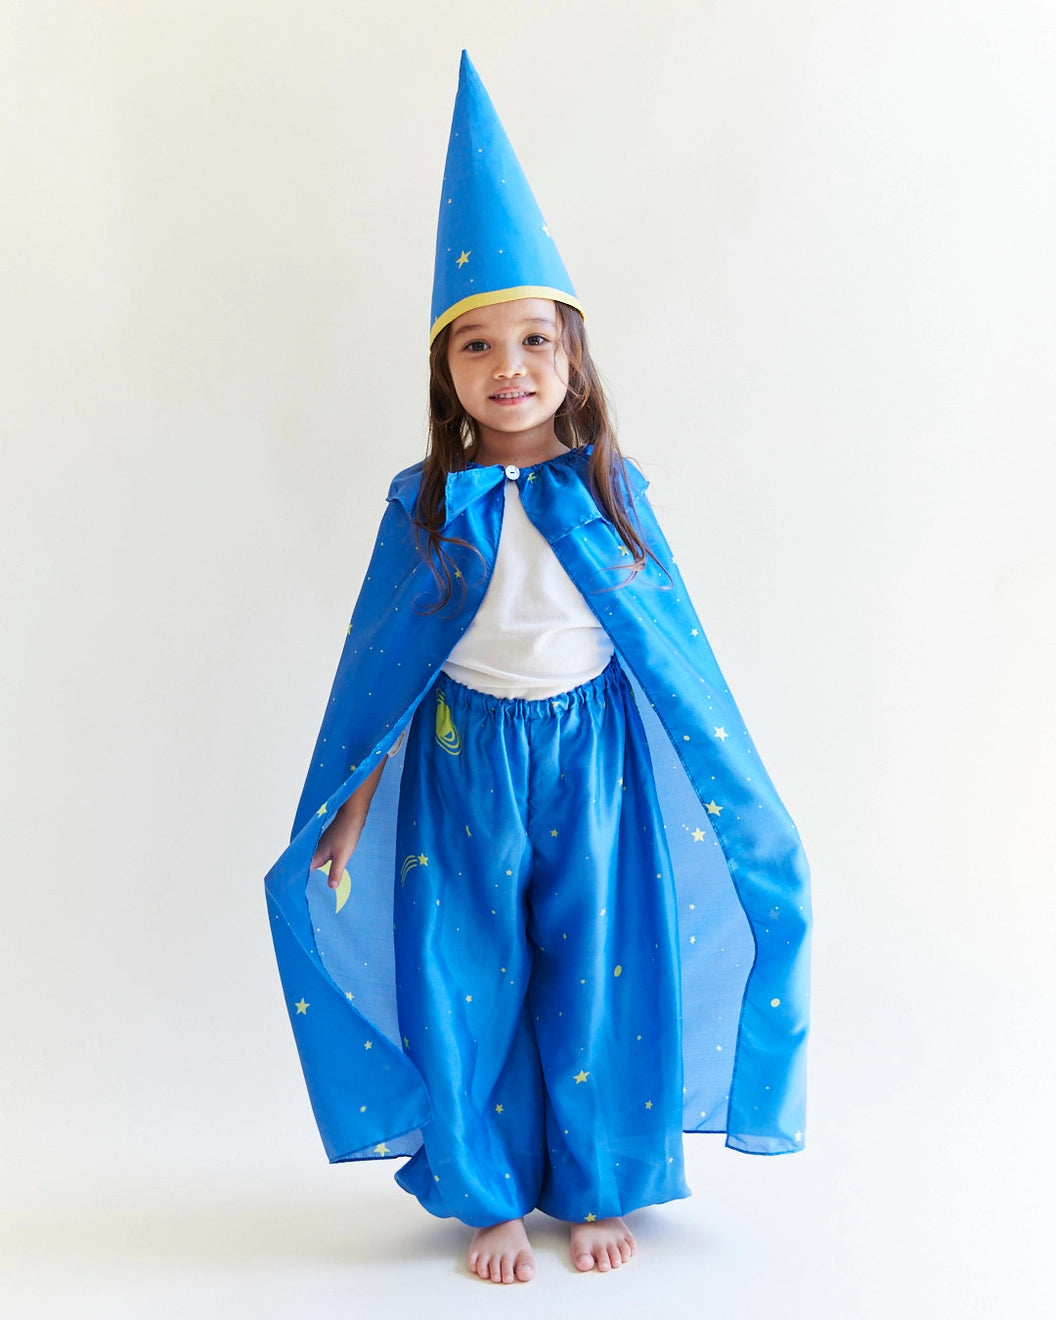 Star Silk Cape for Dress Up Pretend Play - Alder & Alouette